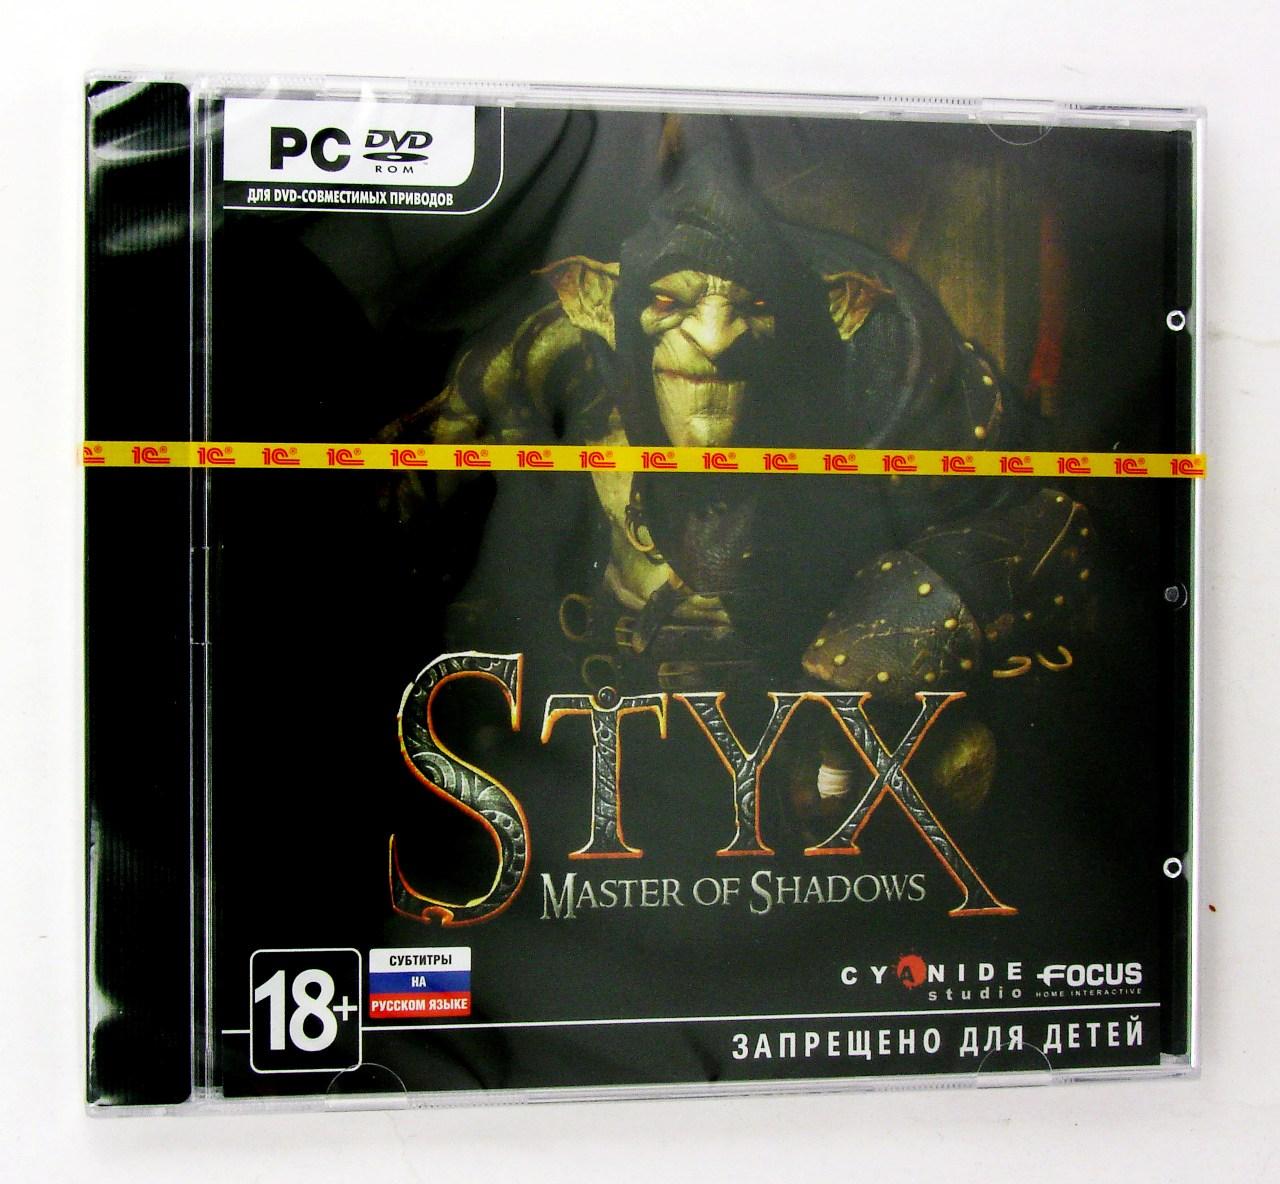 Компьютерный компакт-диск Styx: Master of Shadows (PC), "1С-СофтКлаб", DVD